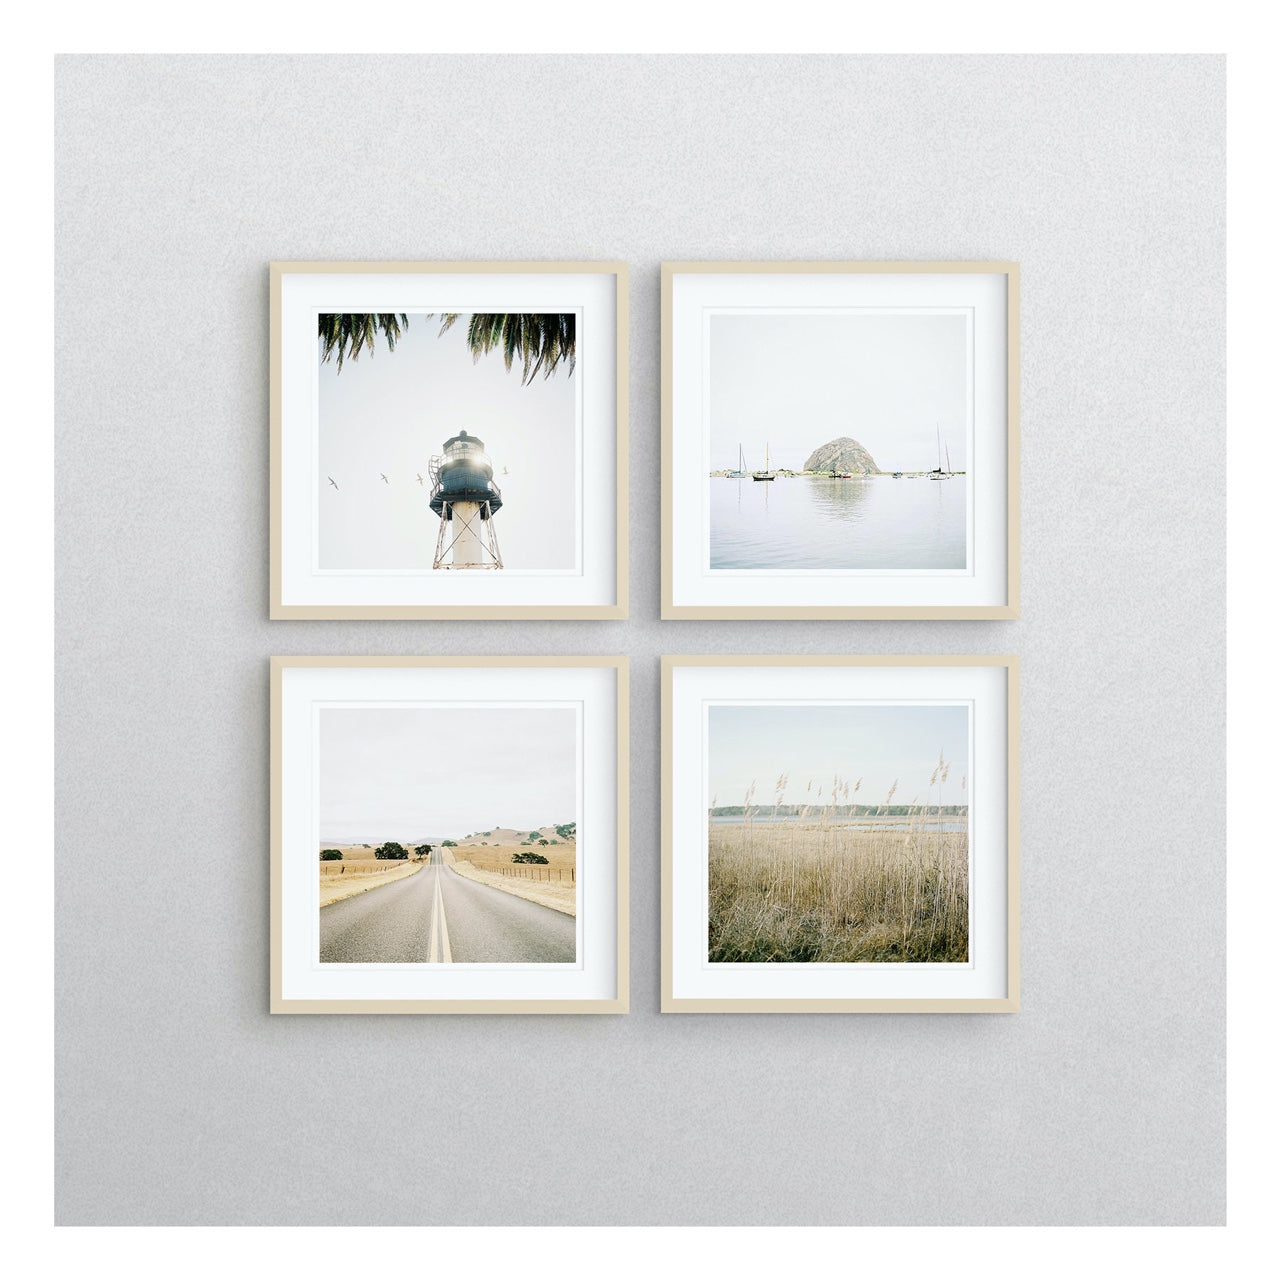 Gallery Frames - Set of 6, Photo Display